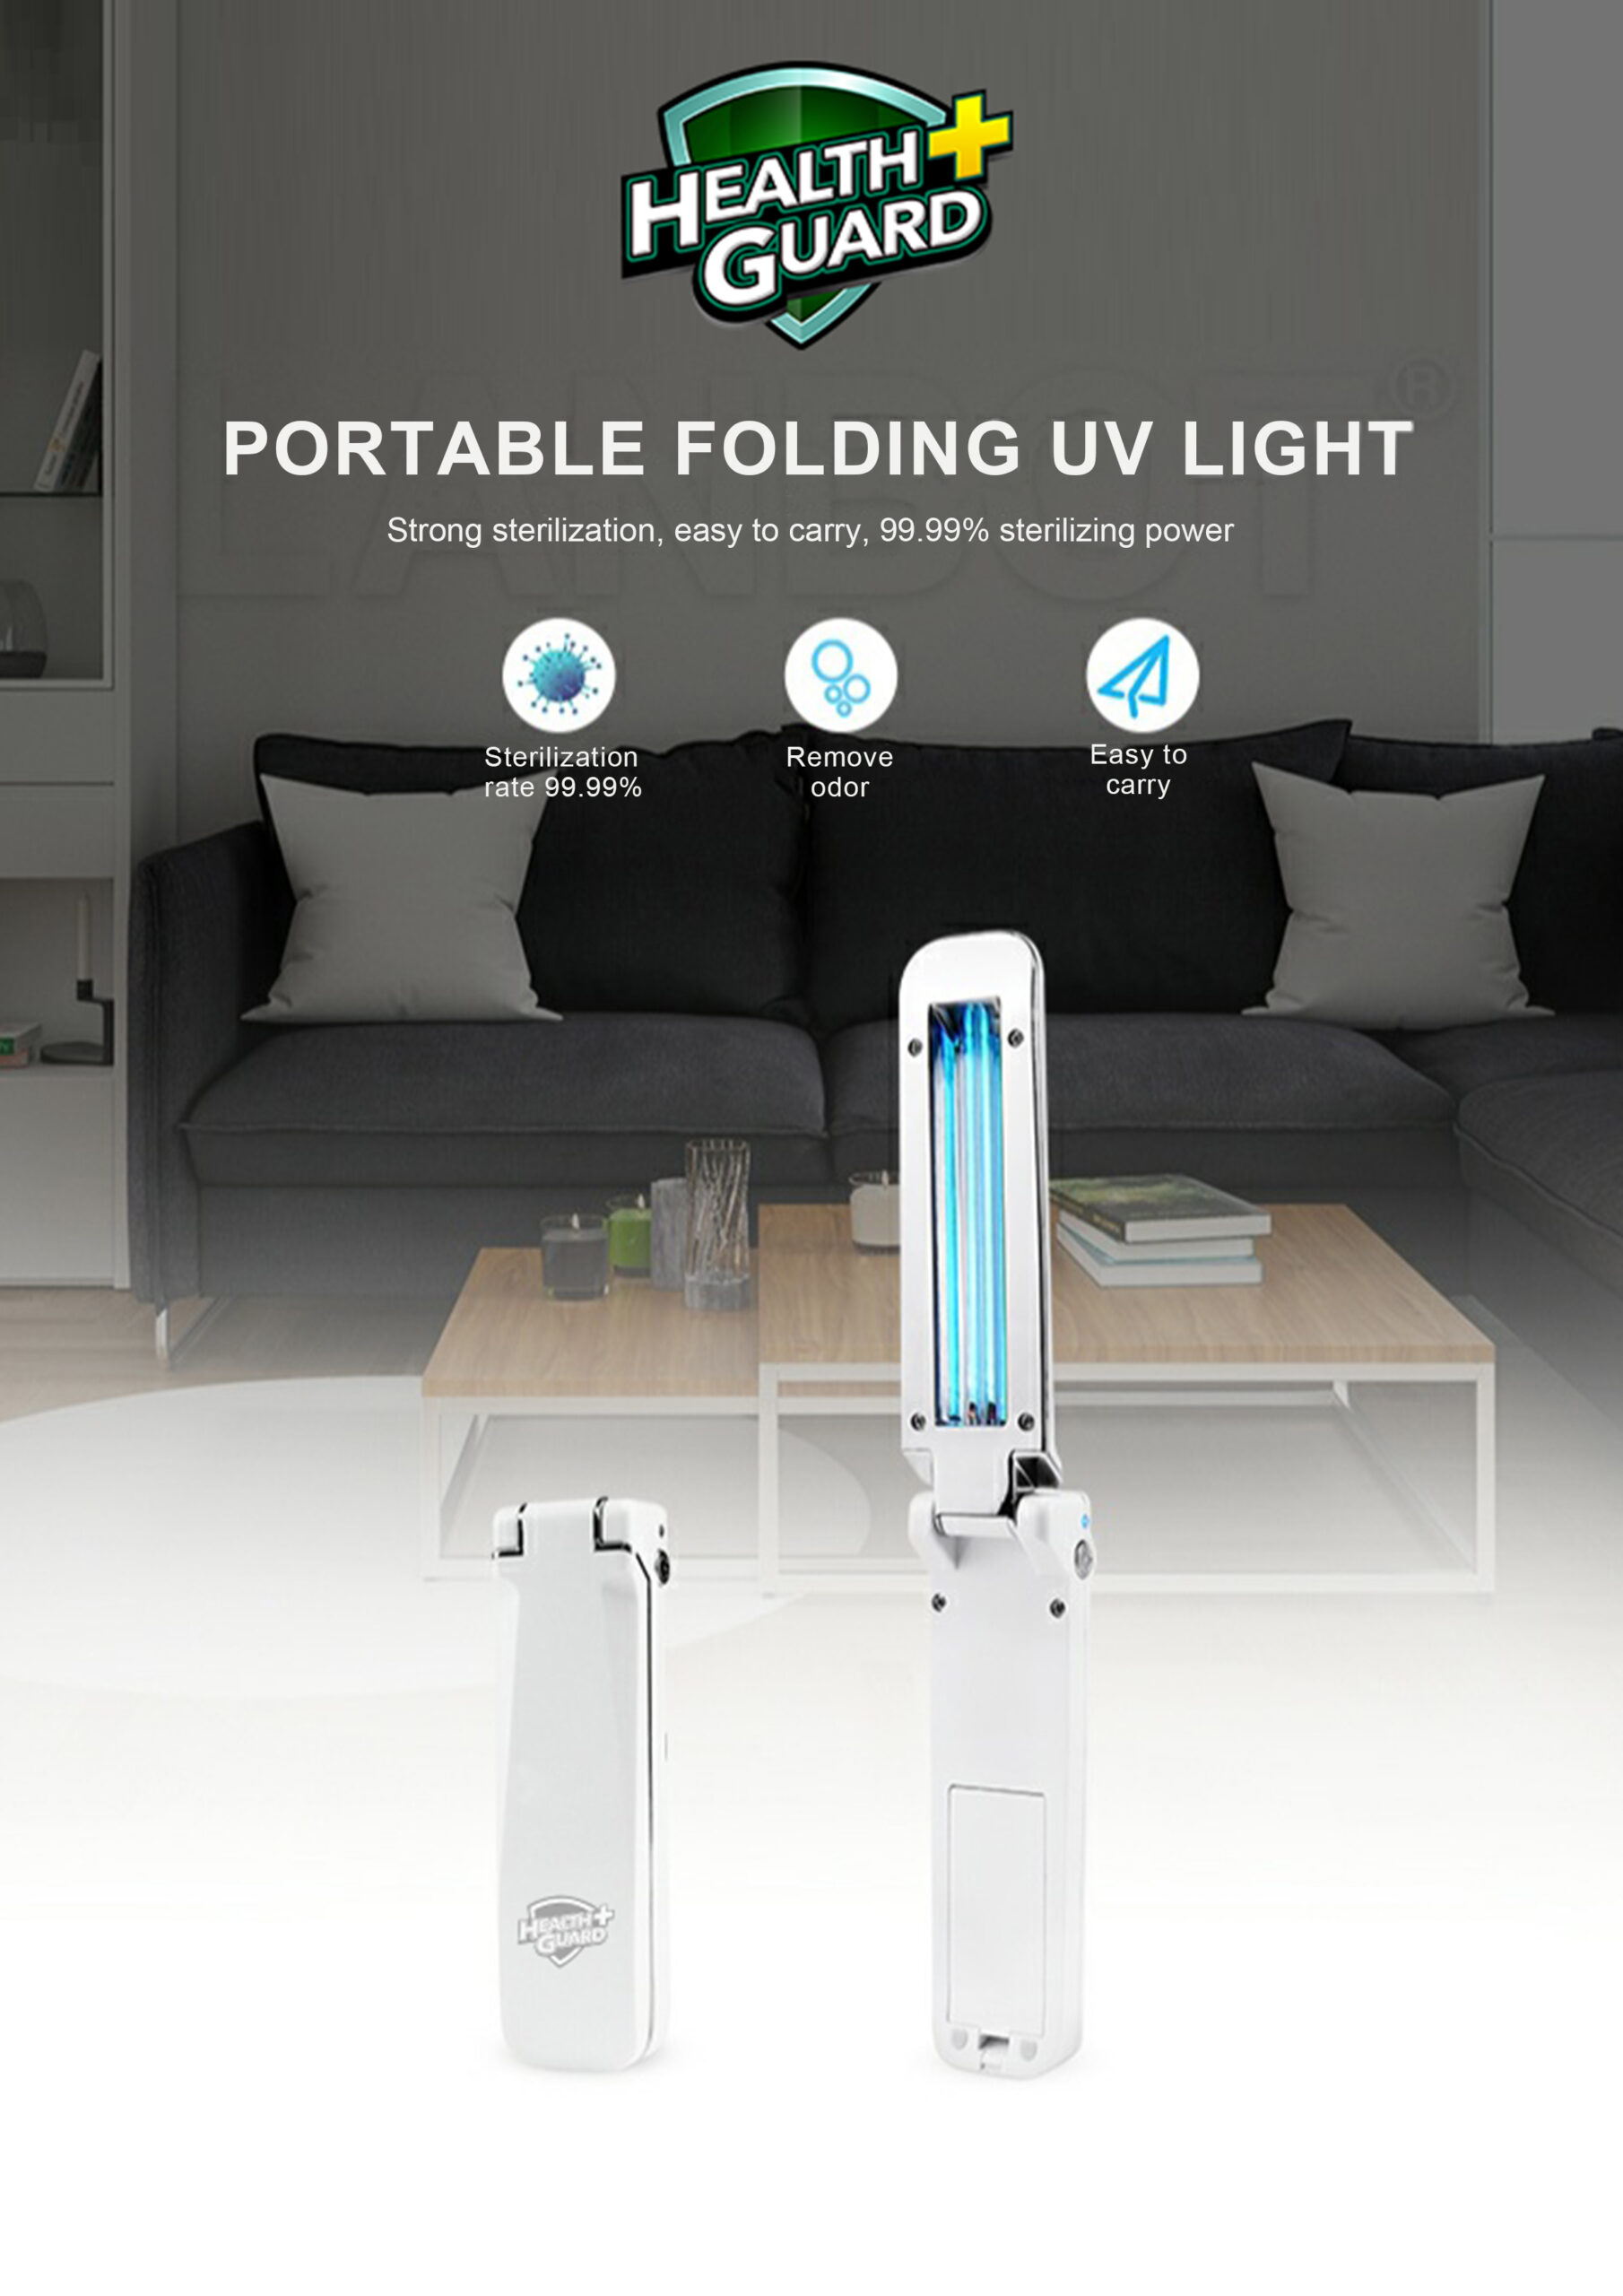 Health Guard Portable UV Folding Sterilizer | The Nest Attachment Parenting Hub